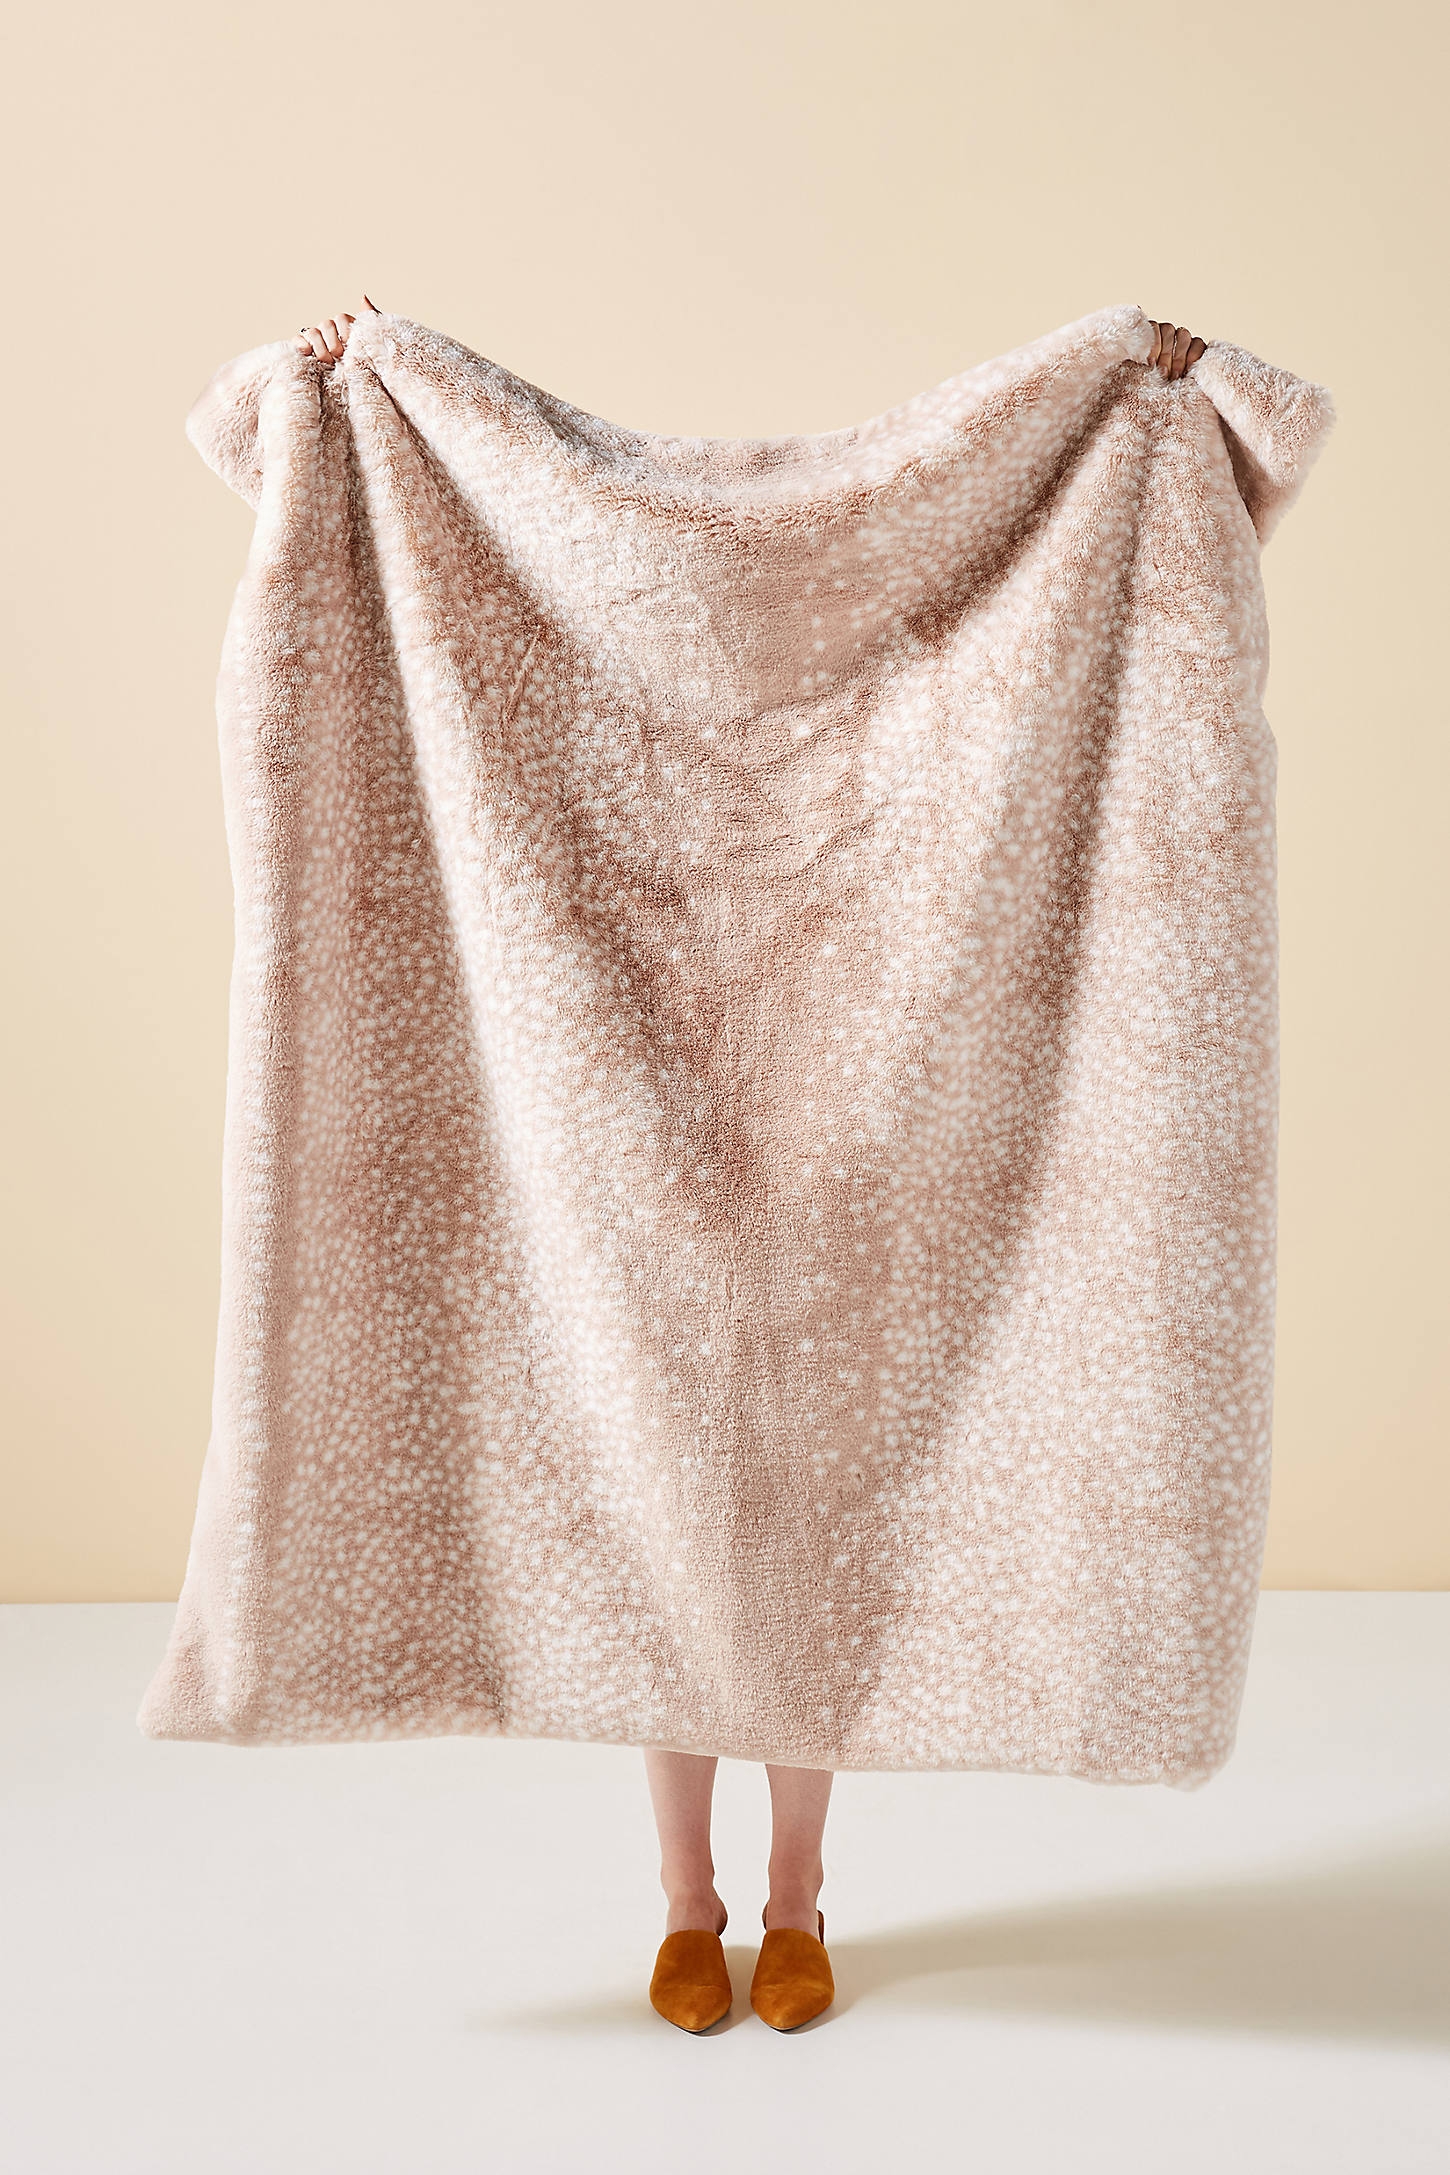 Fawn Faux Fur Throw Blanket - Image 0